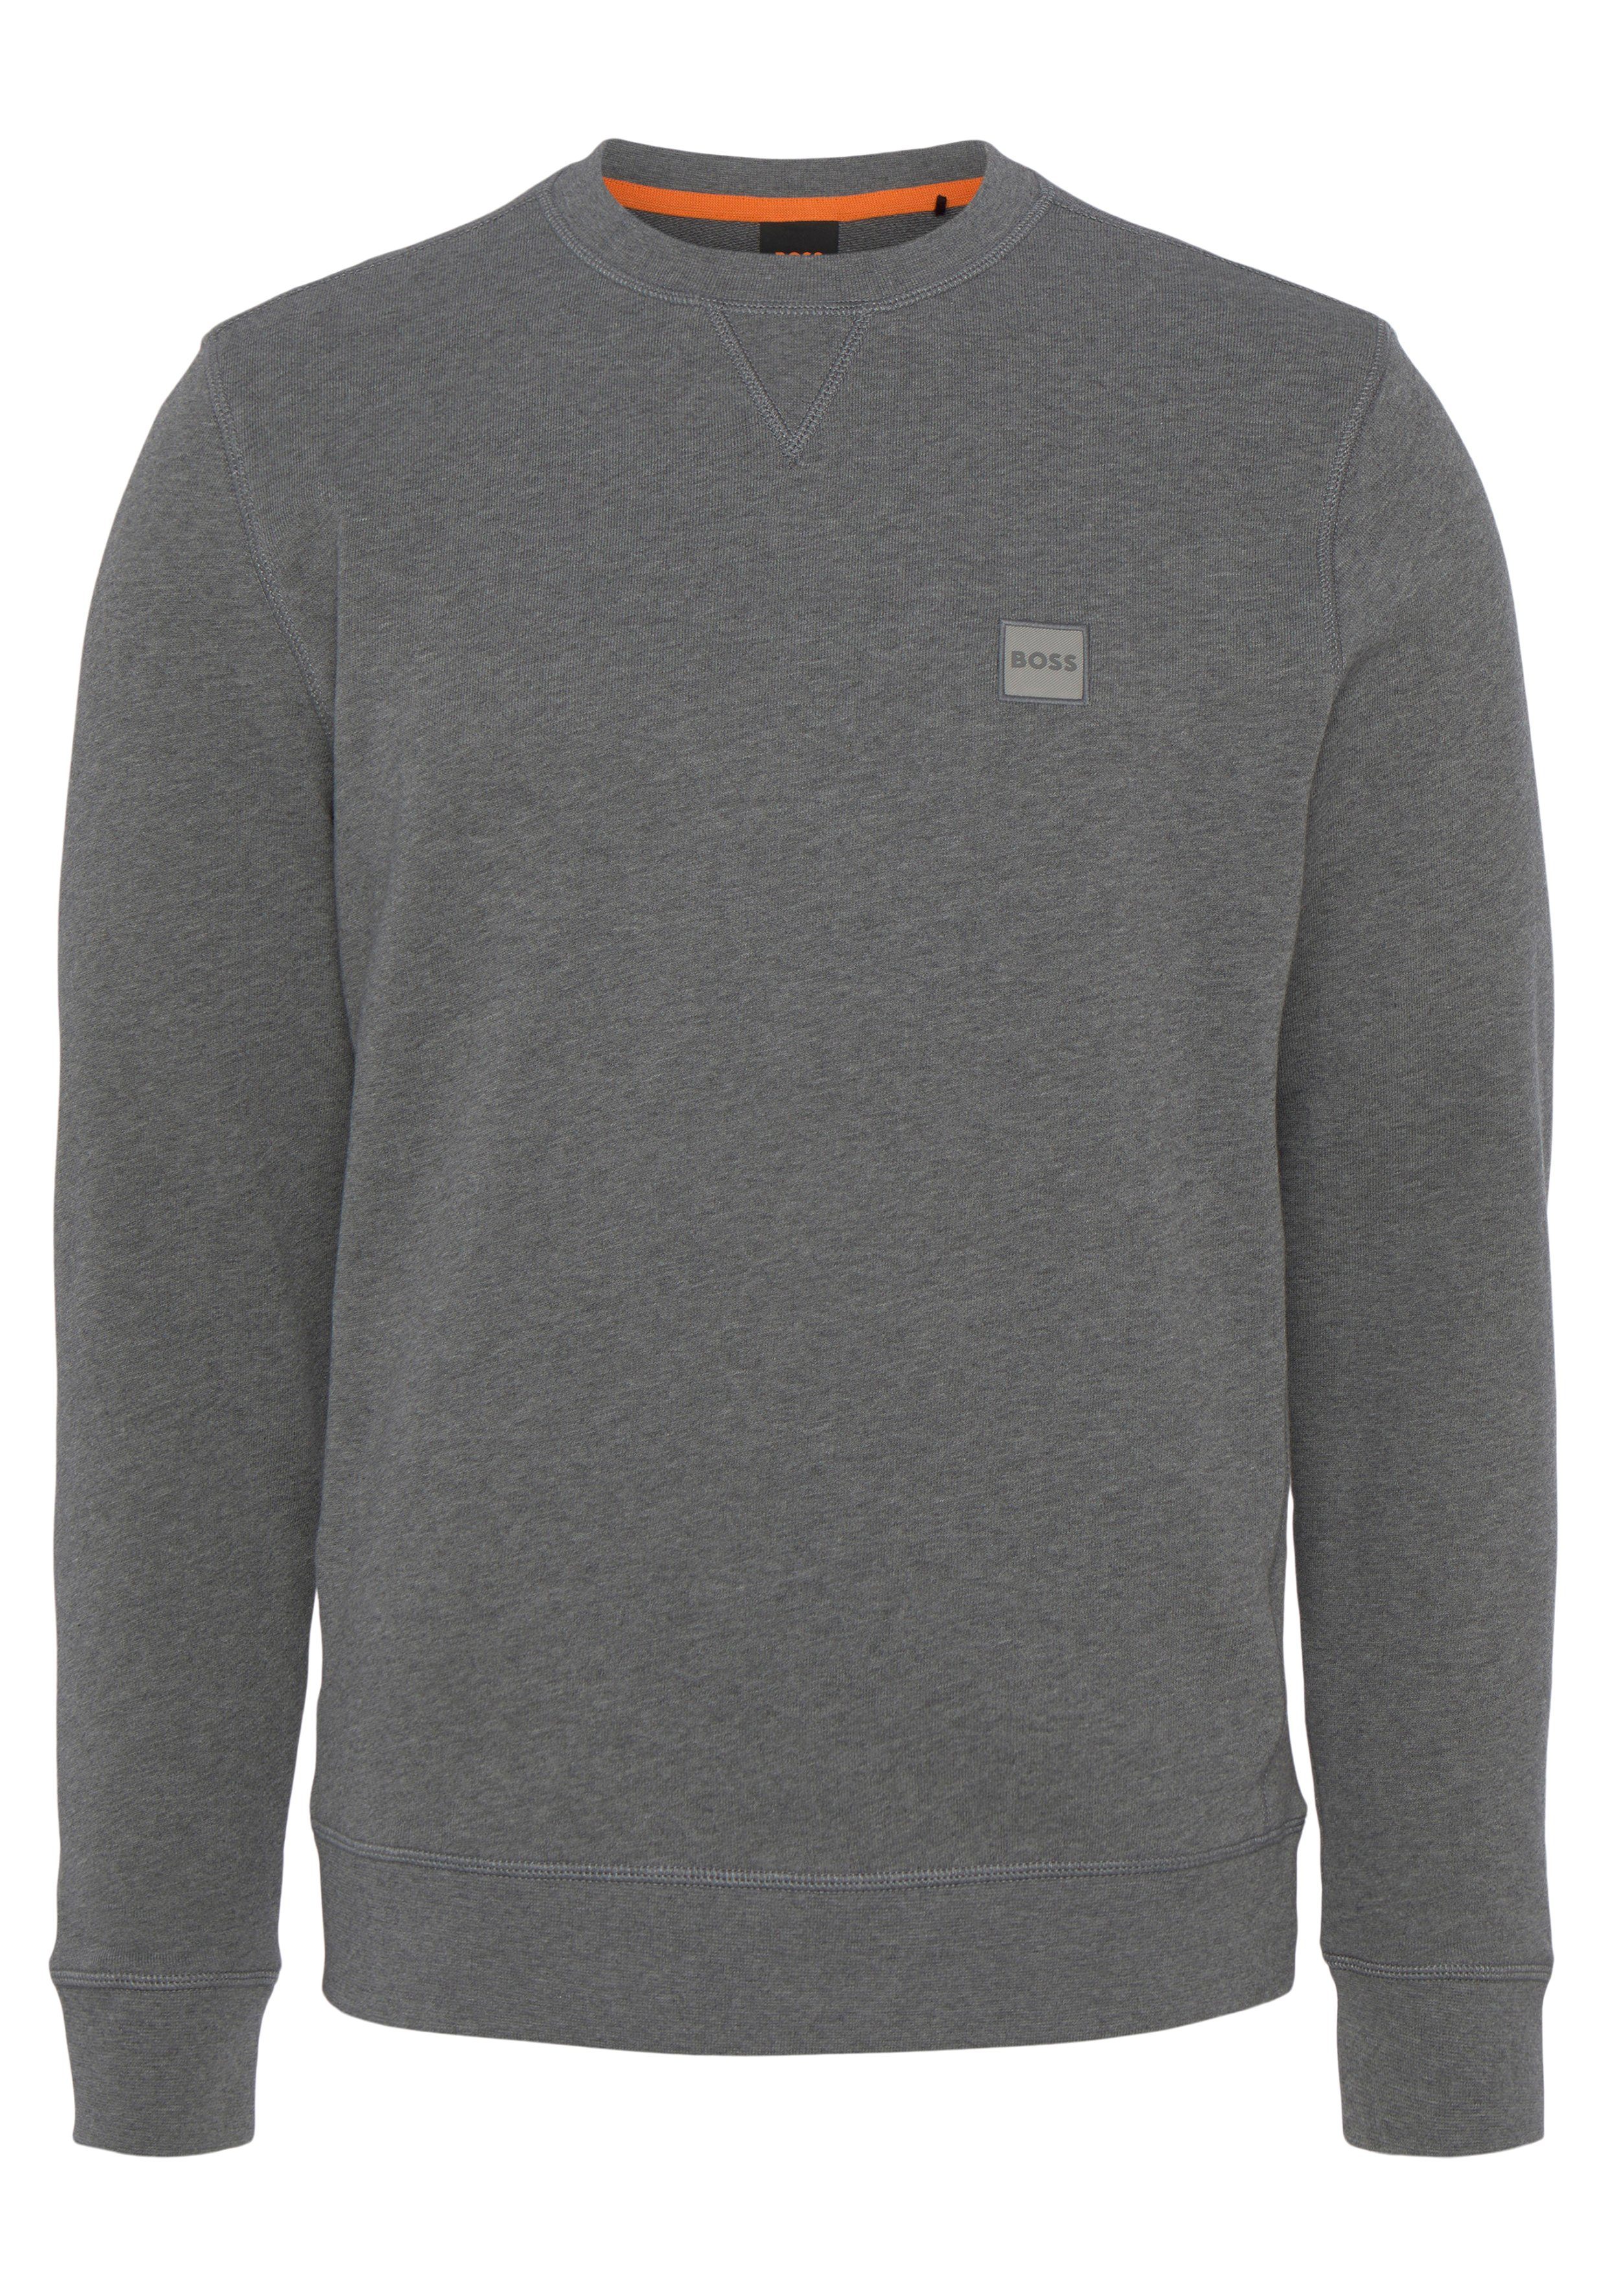 BOSS ORANGE Sweatshirt Westart hoher Tragekomfort 051_Light/Pastel_Grey